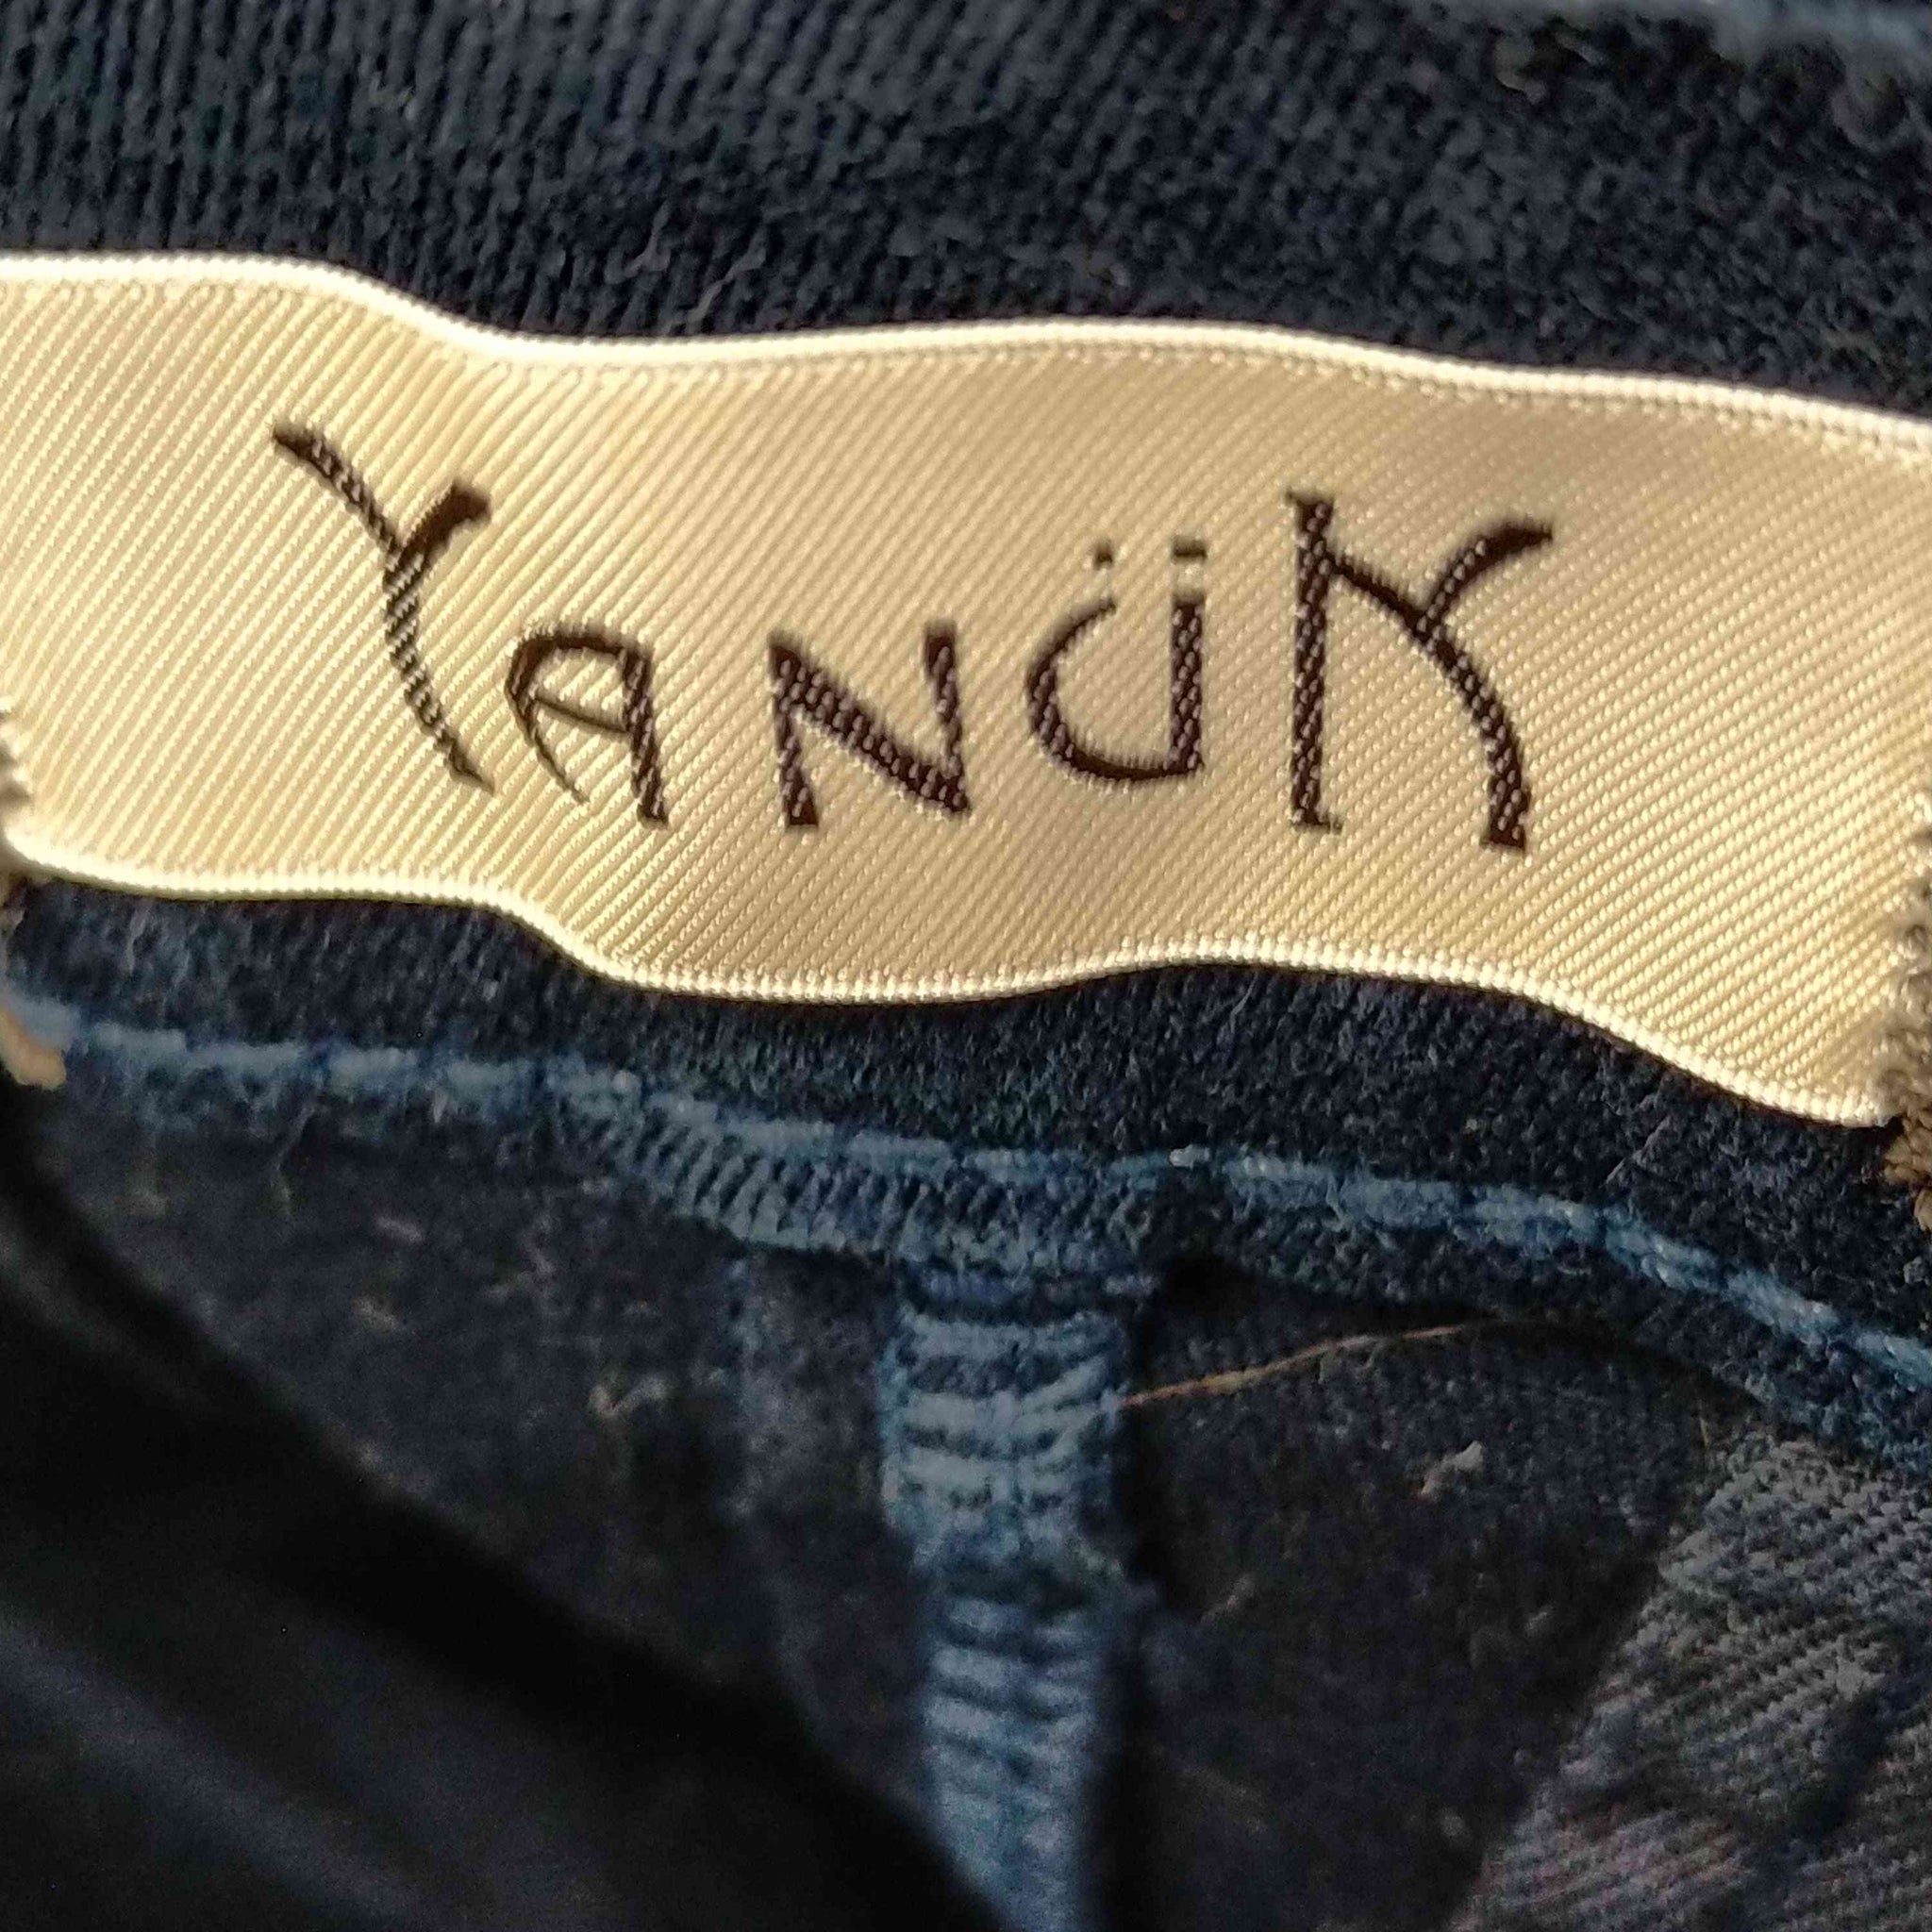 YANUK(ヤヌーク)Aライン ベイカースカート